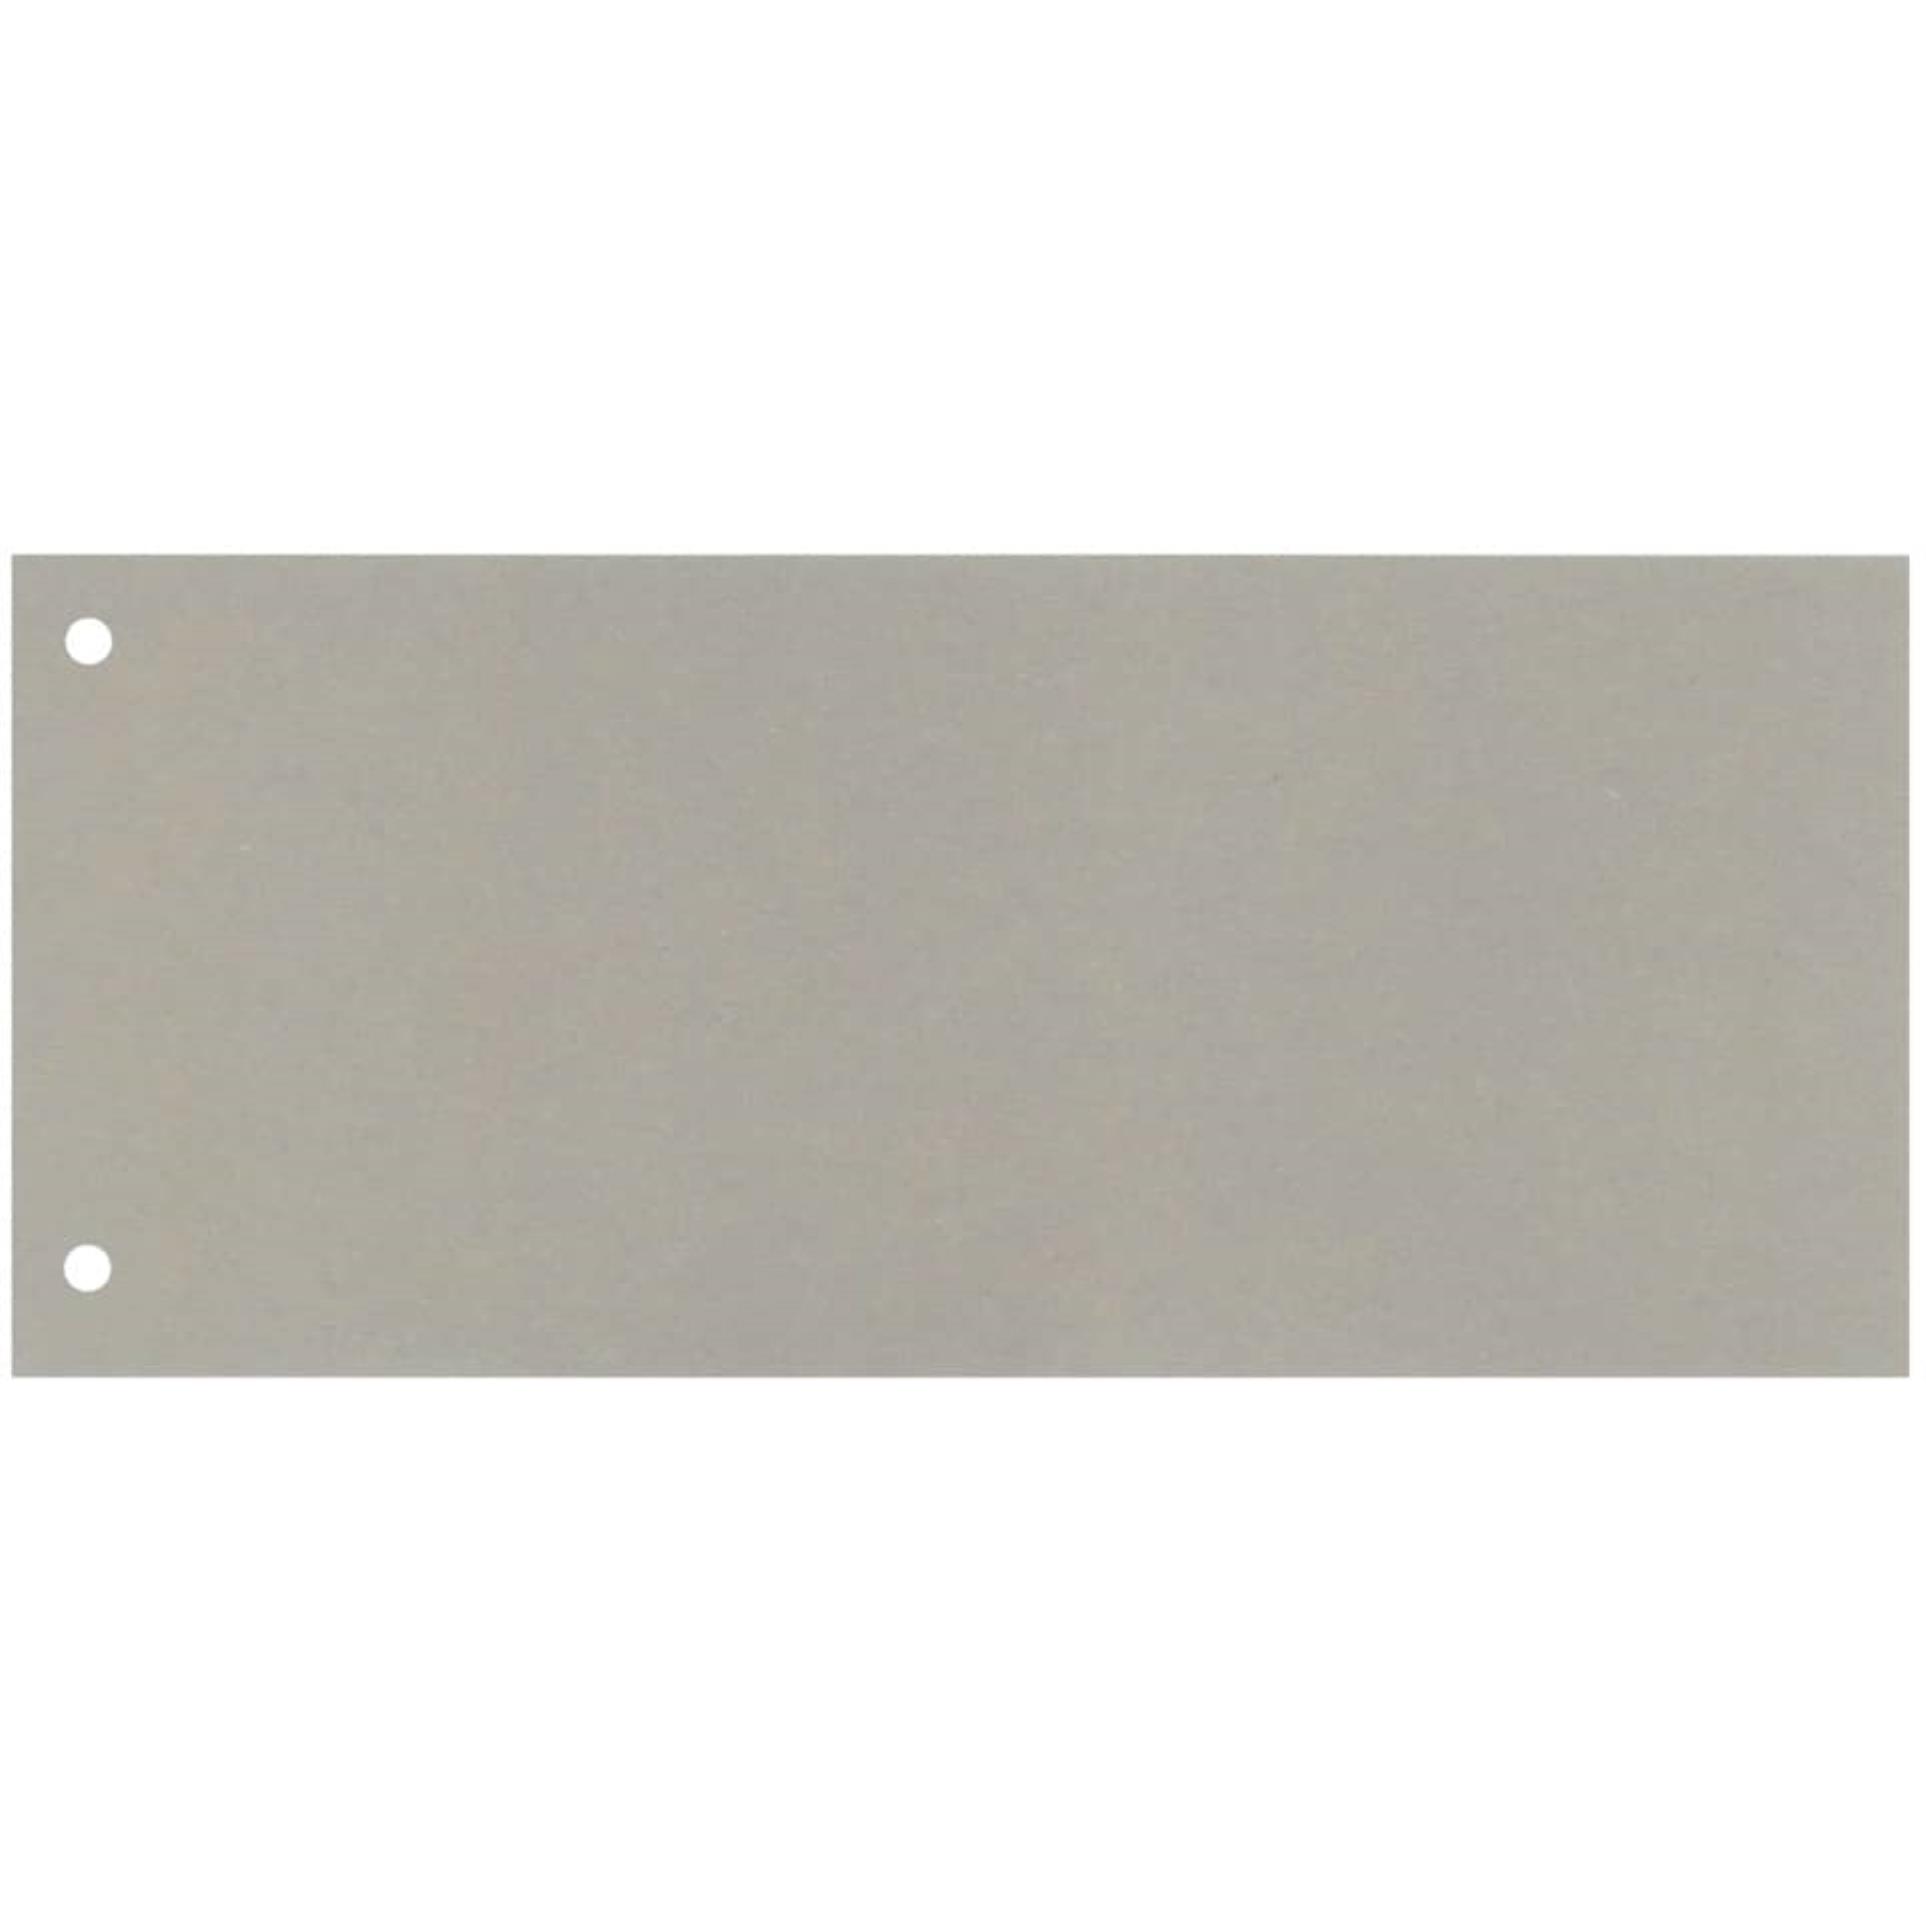 Papírový rozřazovač 1/3 Q-Connect, šedý, 100 ks